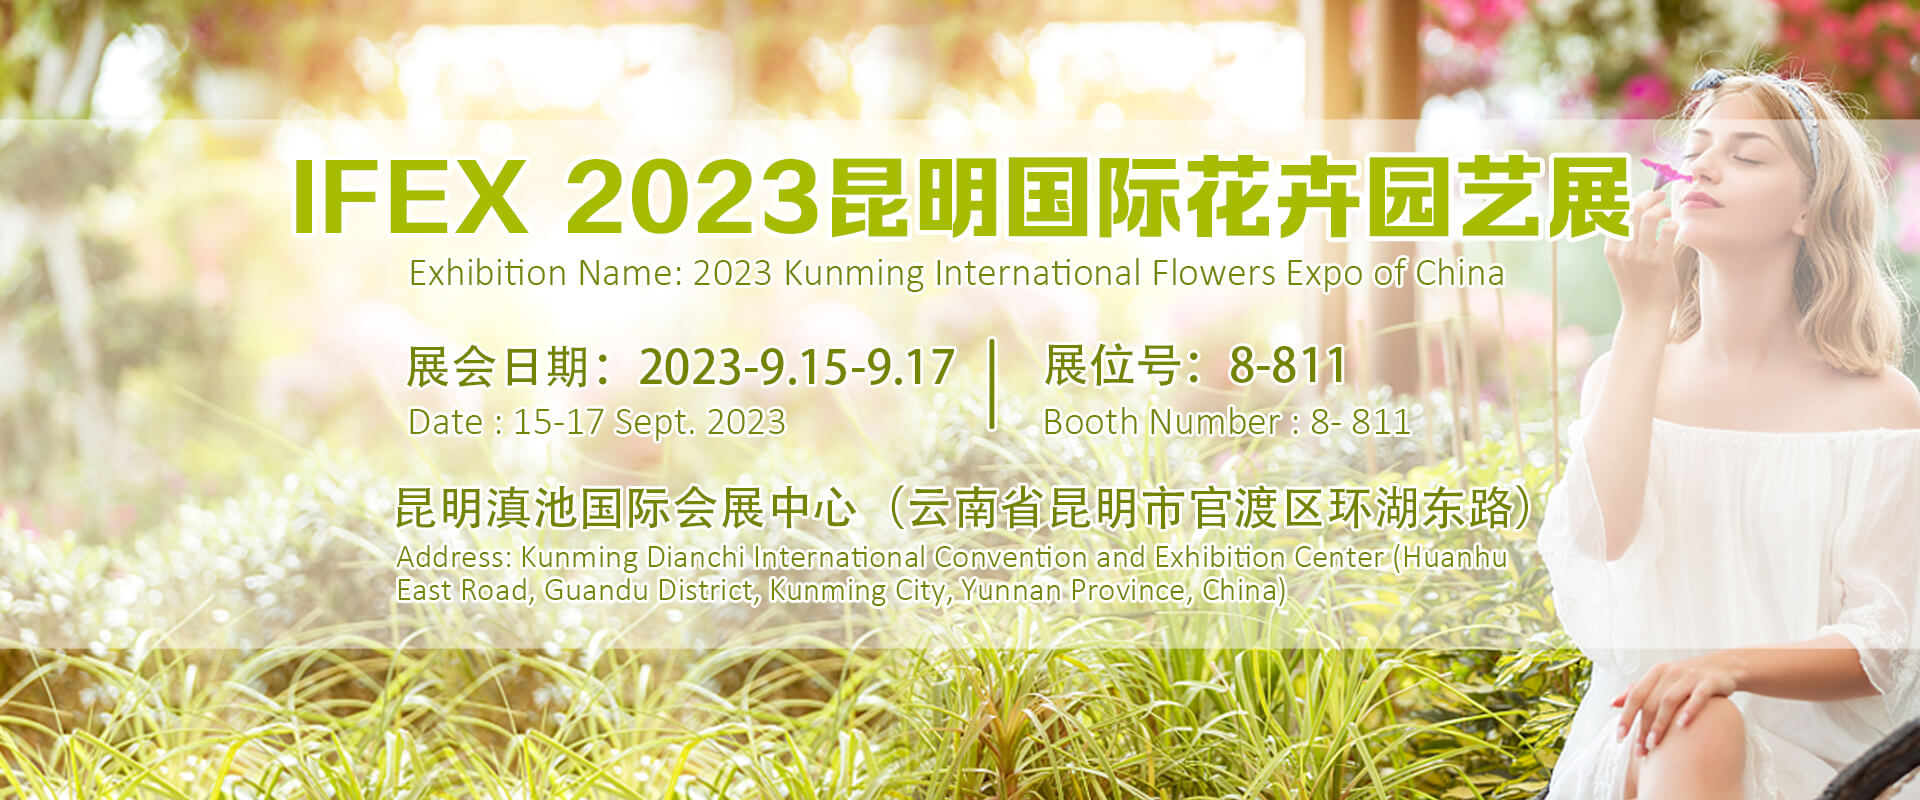 Kunming Internation Flowers Expo